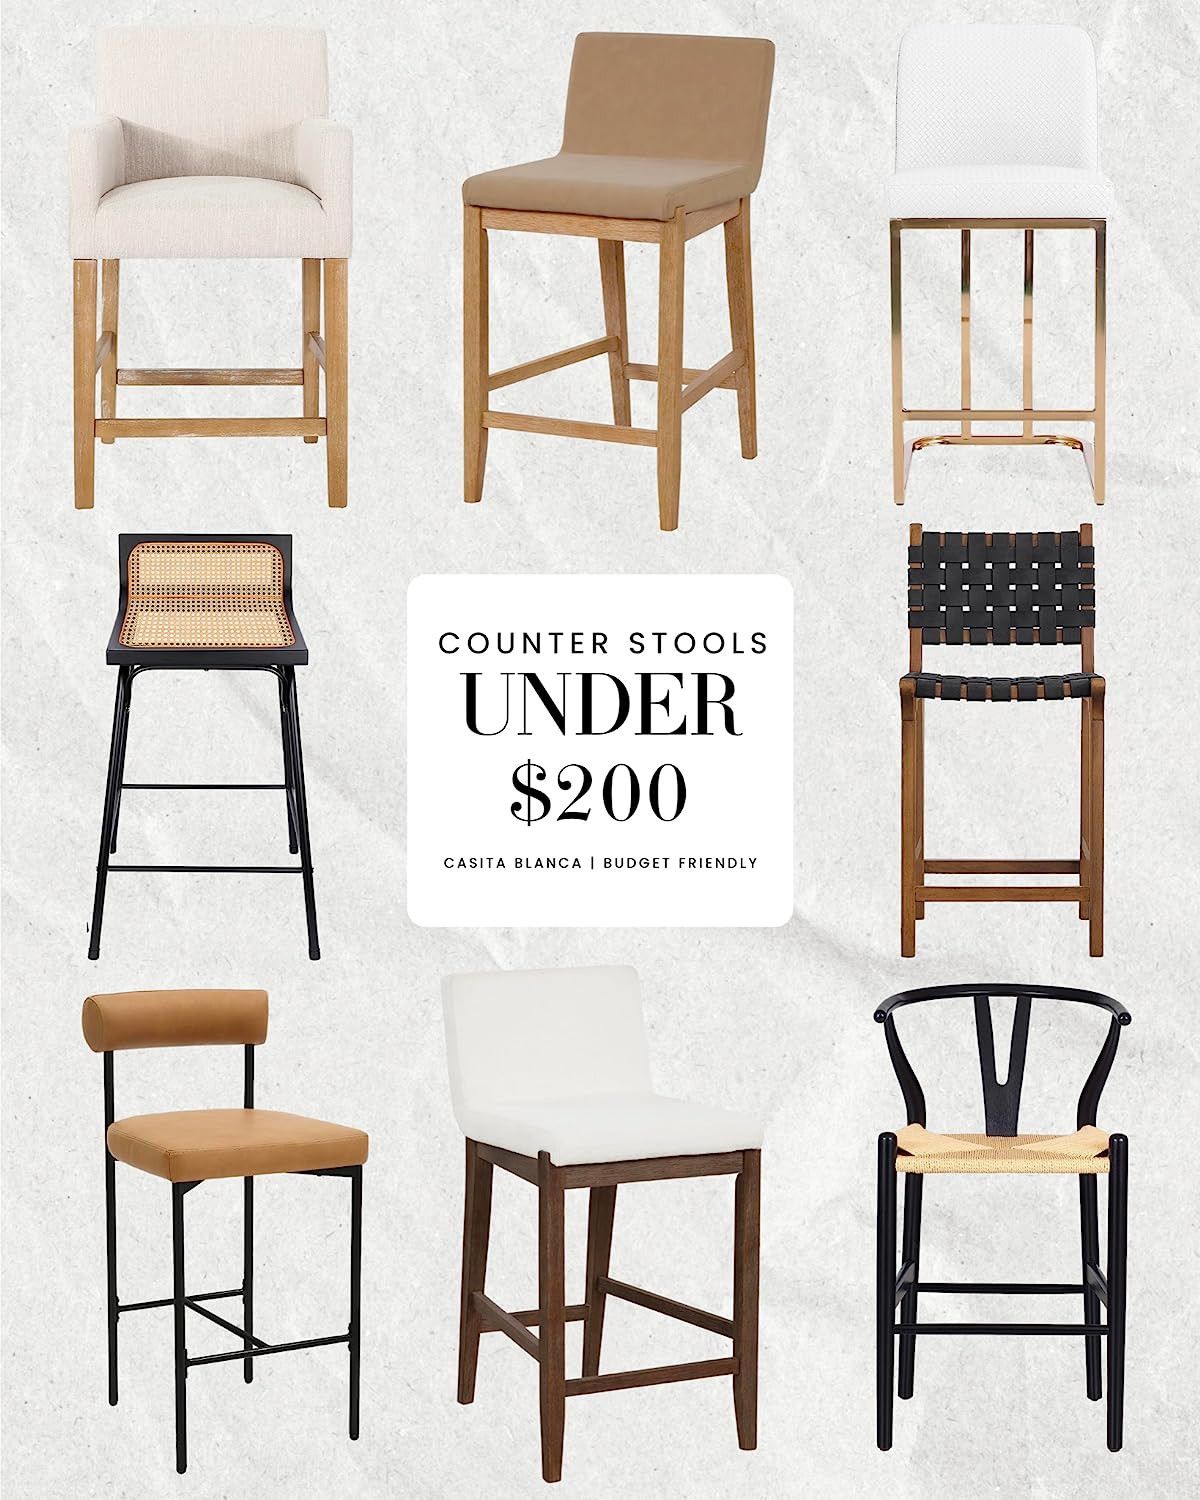 Counter stools under $200 | Amazon (US)